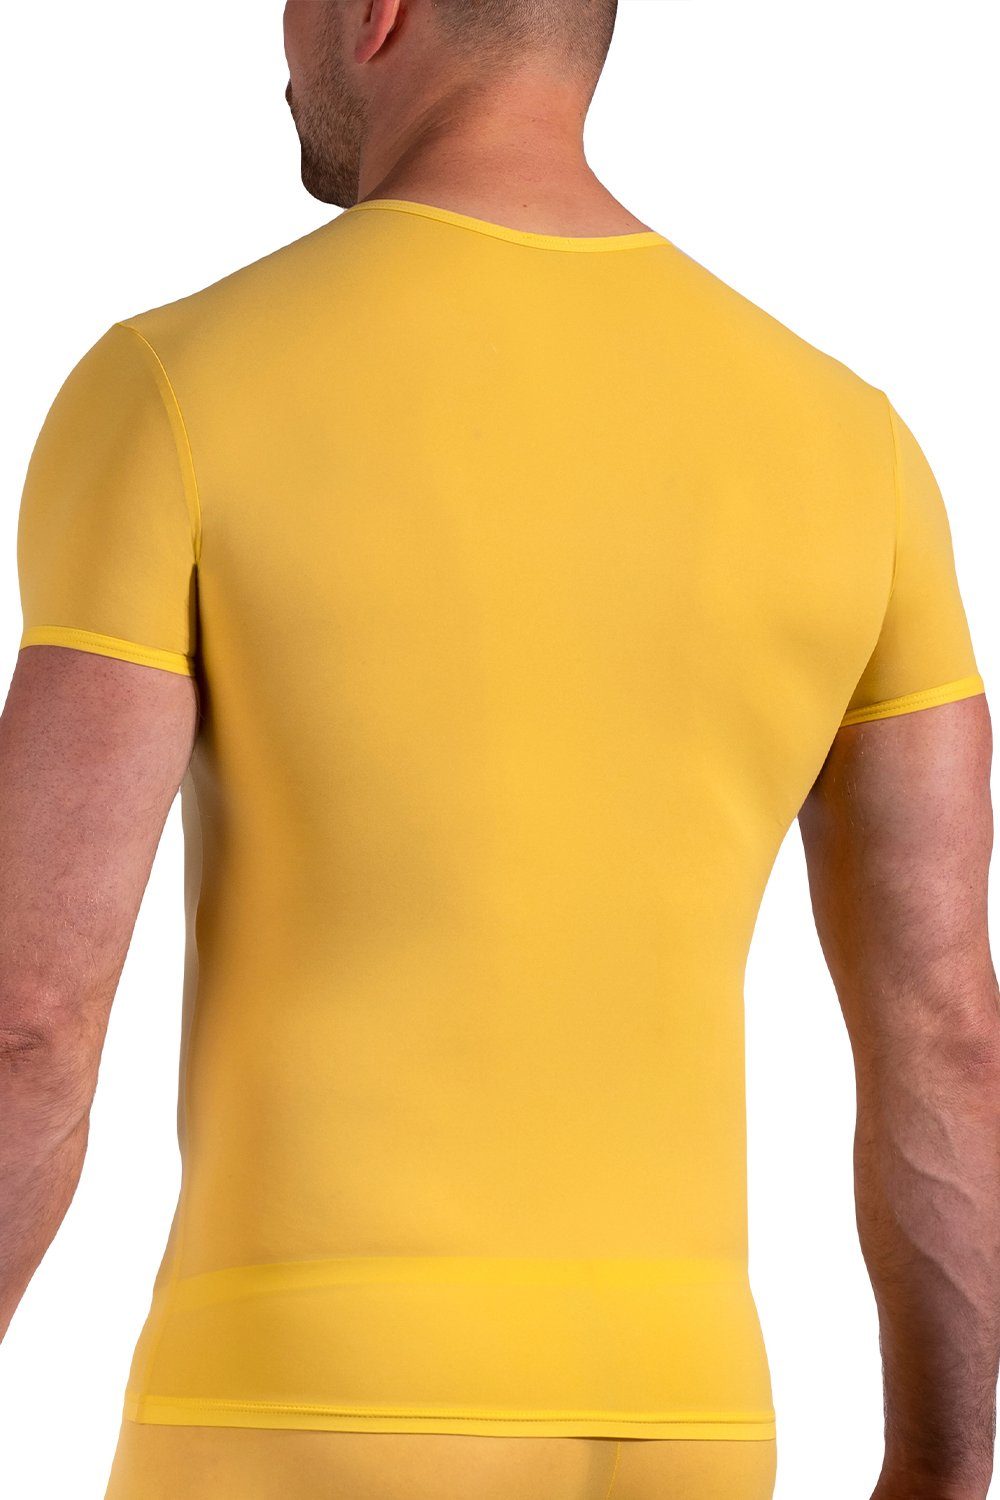 Olaf Benz Shirt mustard (Low) T-Shirt 106024 V-Neck